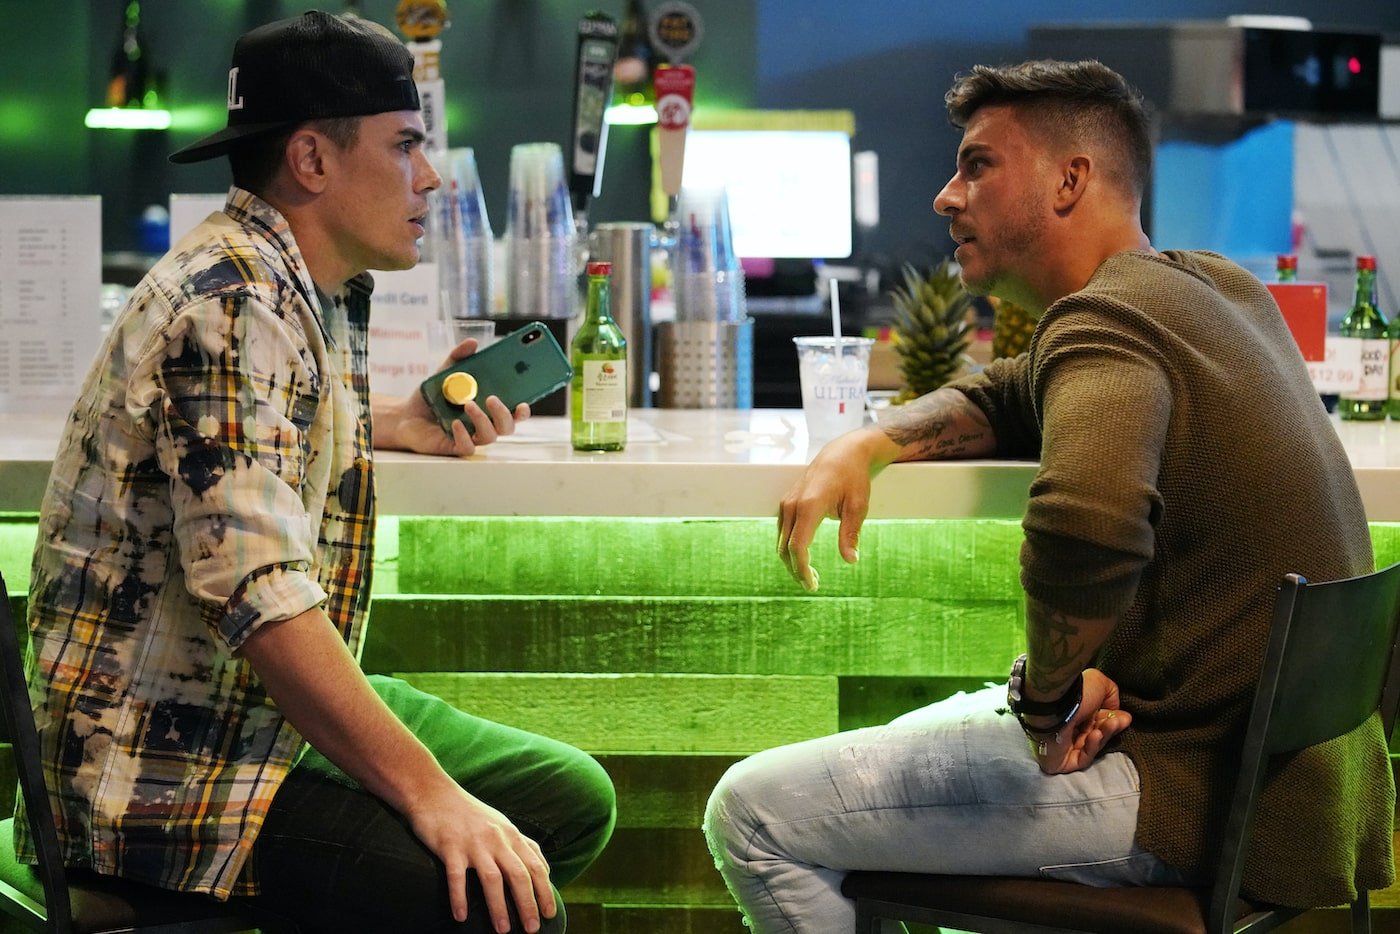 Tom Sandoval and Jax Taylor talk at a bar on 'Vanderpump Rules'